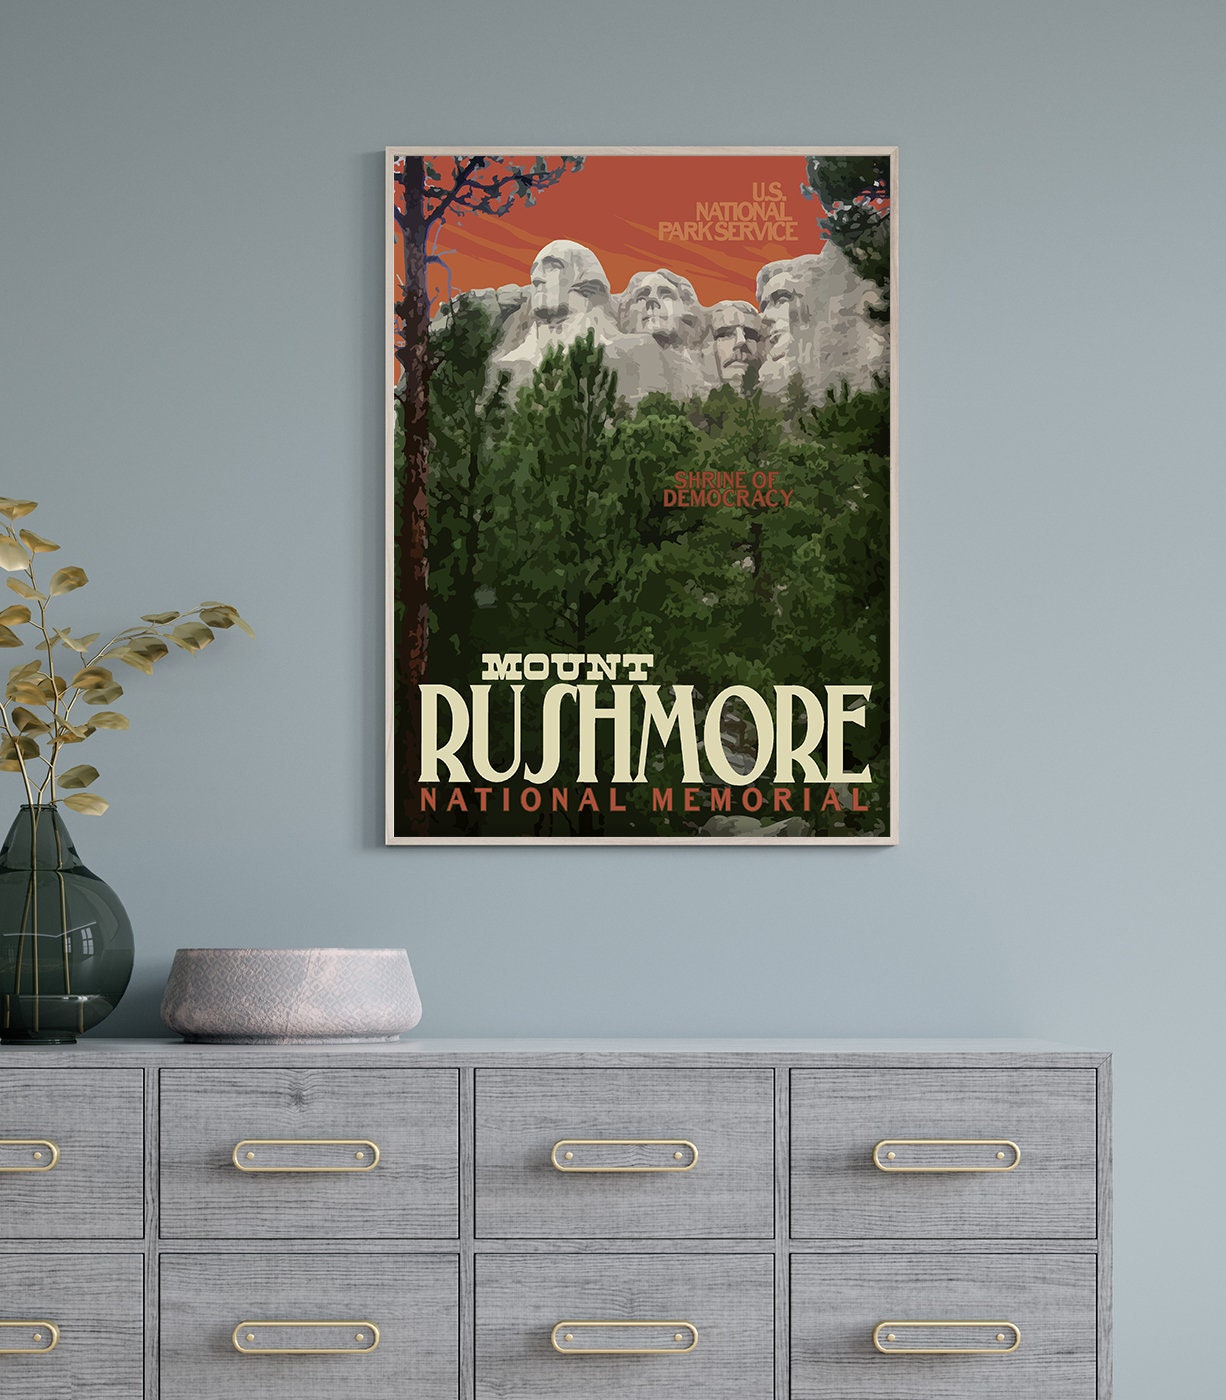 Mount Rushmore National Memorial Print, Mount Rushmore South Dakota Poster, Vintage Style Travel Art